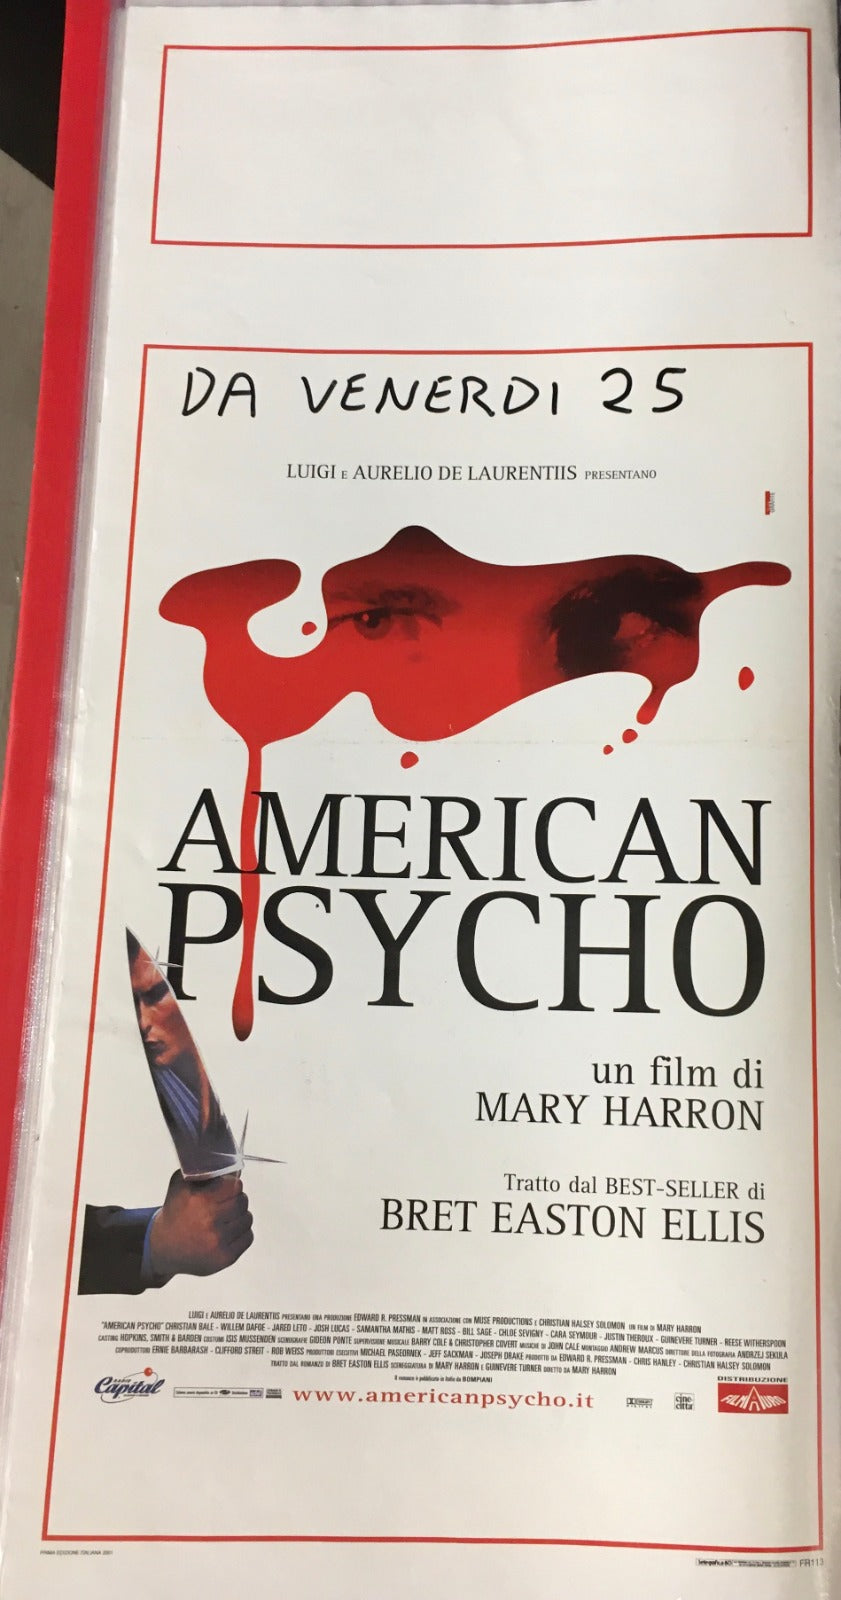 Locandina Di Cinema Originale D'Epoca American Psycho 2001 Tortona4Arte